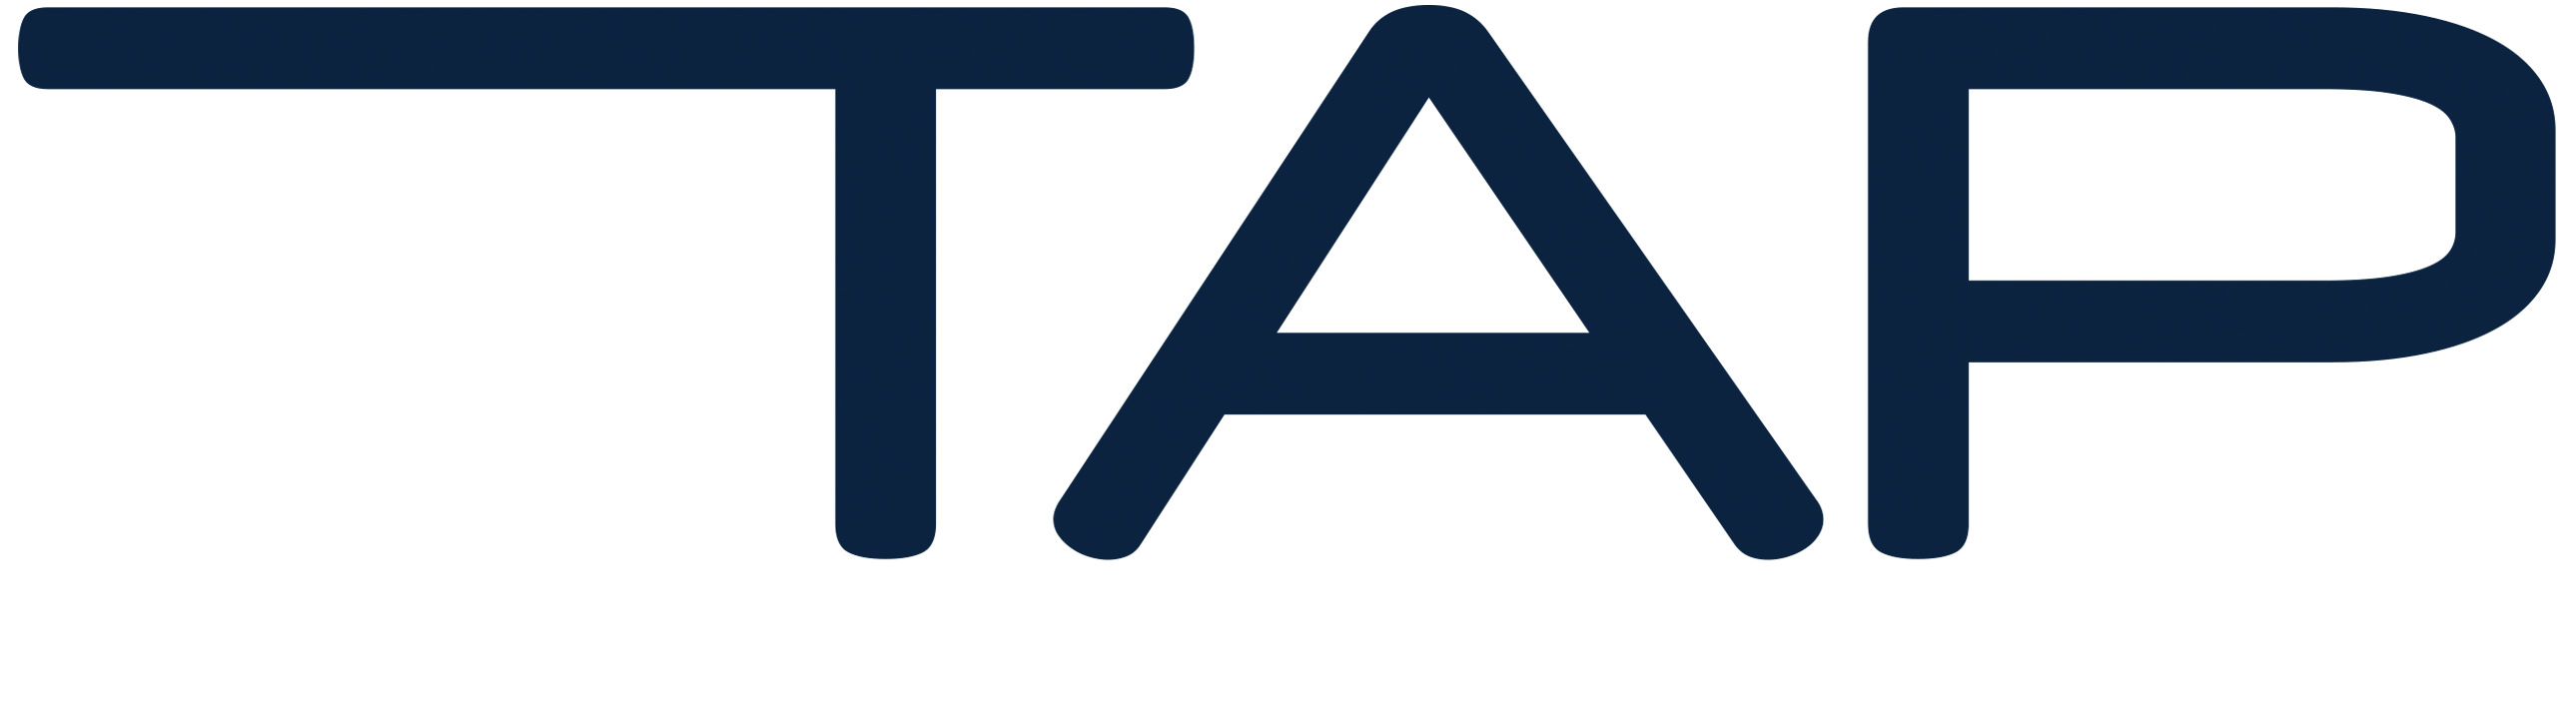 eTAP logo image